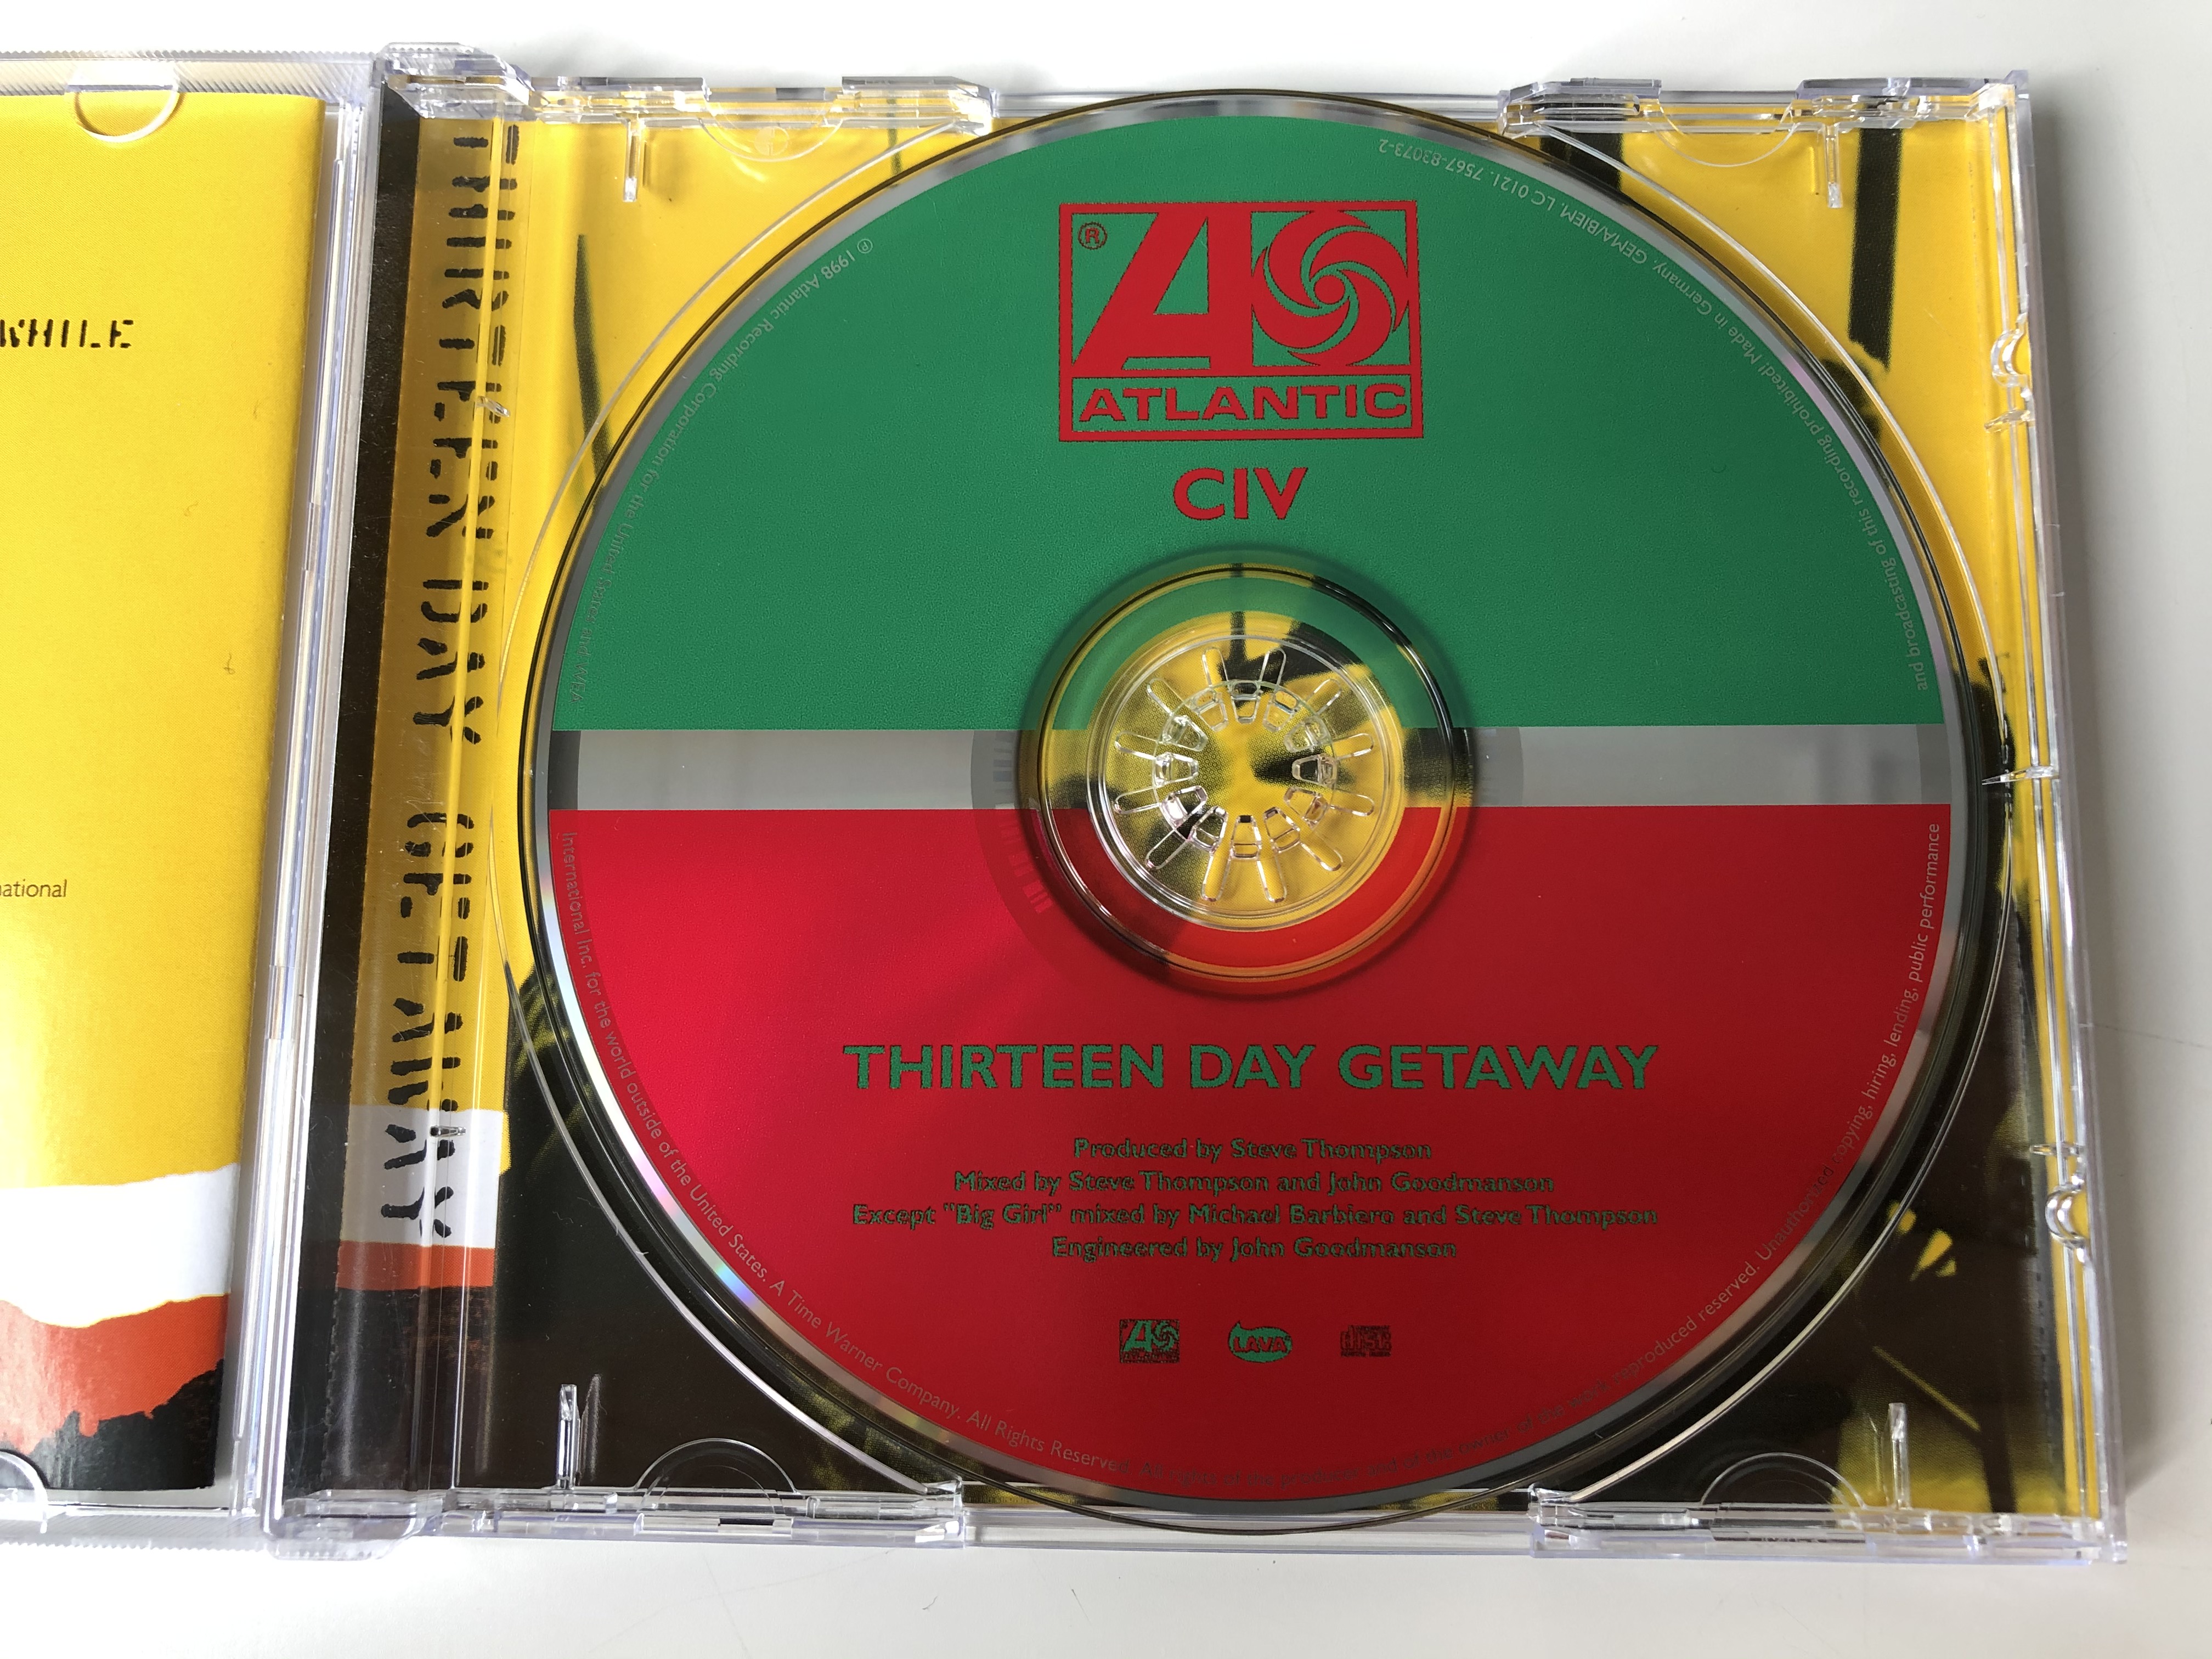 civ-thirteen-day-getaway-atlantic-audio-cd-1998-7567-83073-2-7-.jpg